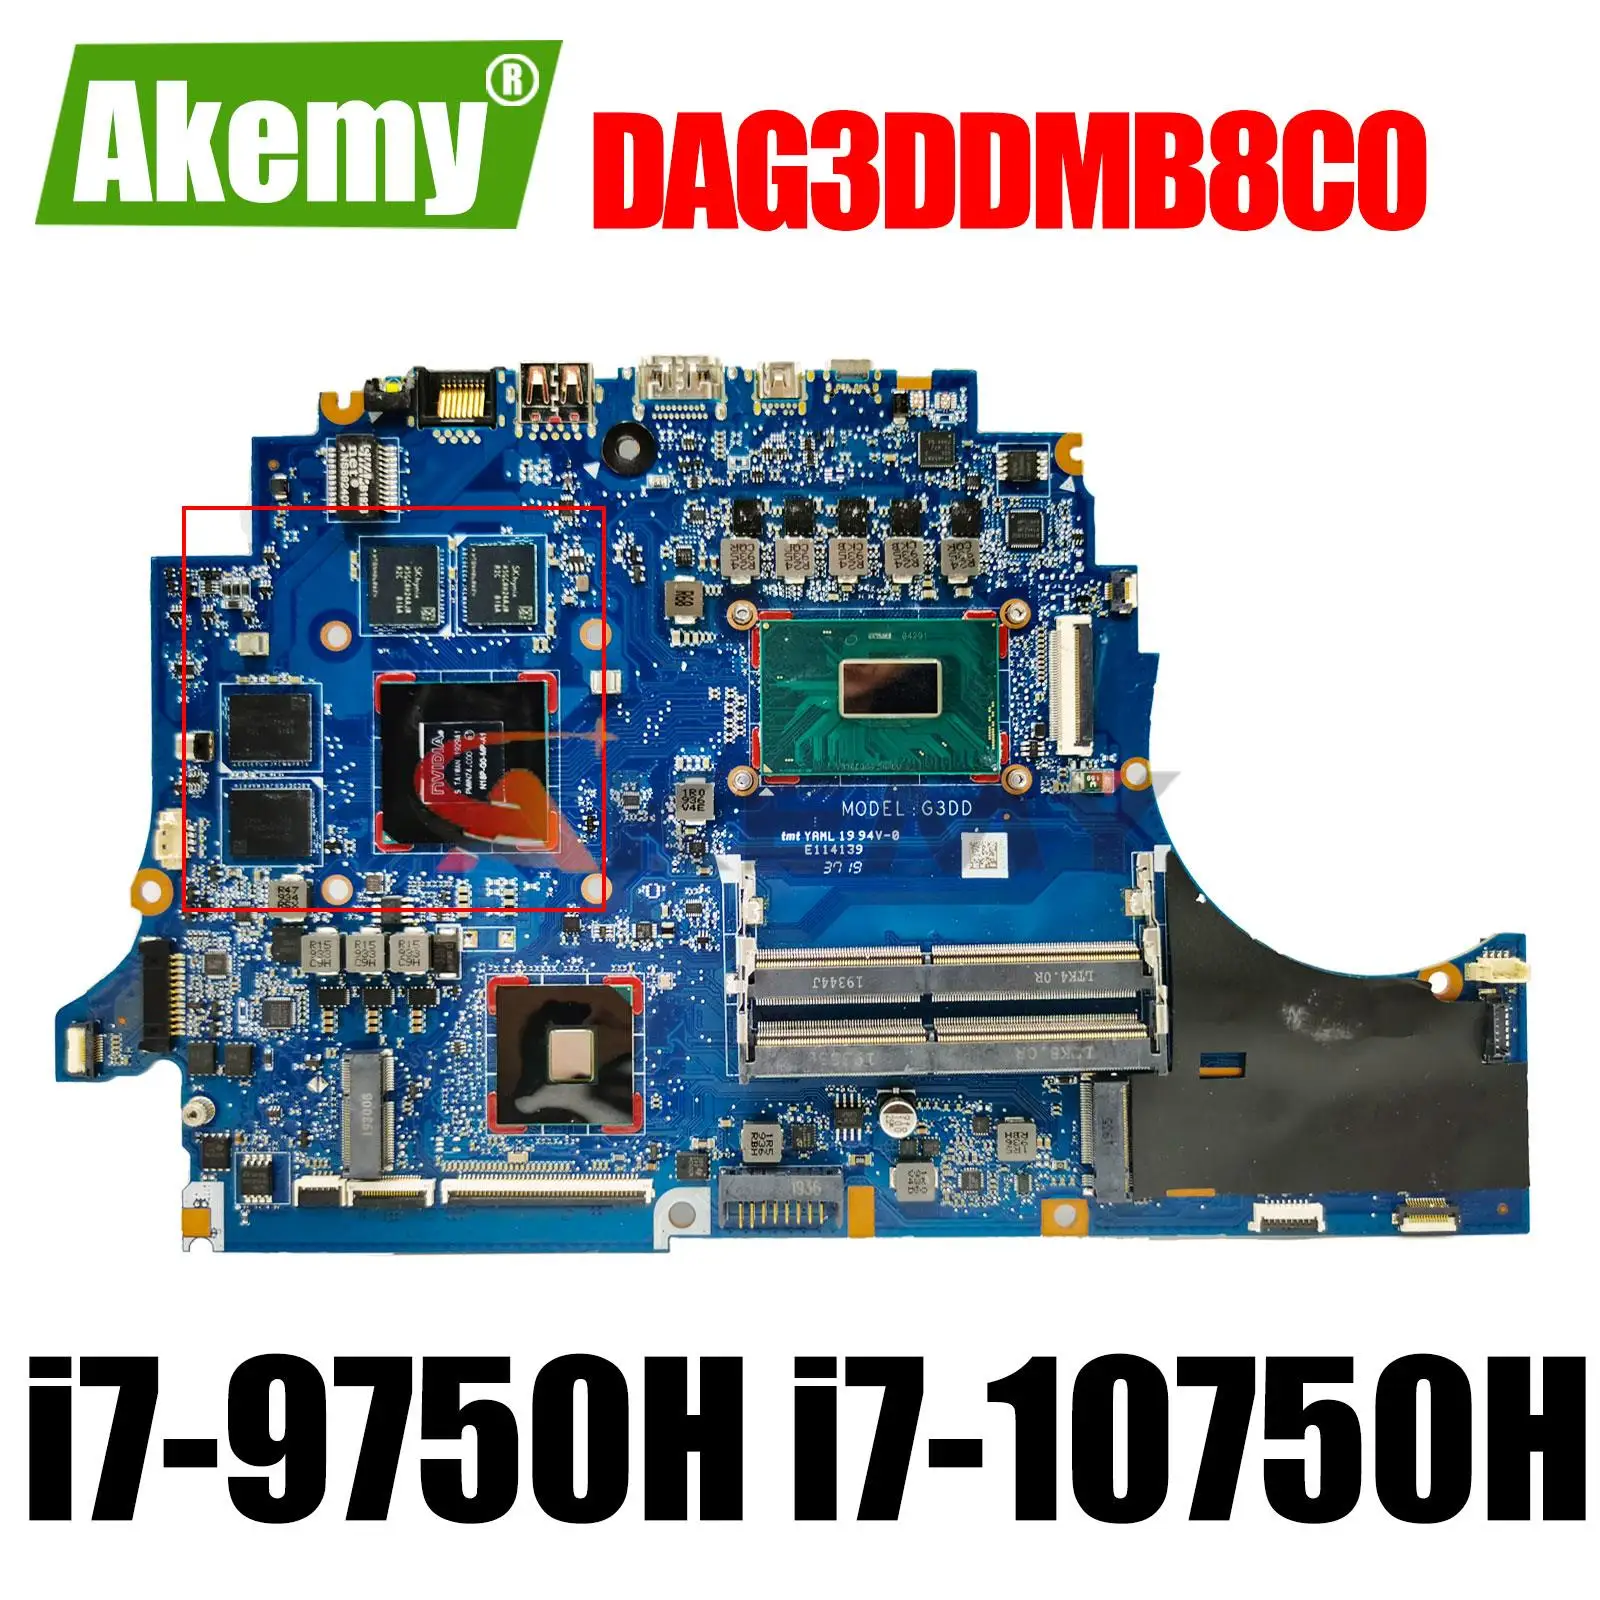 

FOR HP DAG3DDMB8C0 motherboard 15-DC Laptop motherboard mainboard GTX1650M 4GB GPU I5-9300H i7-9750H I7-10750H